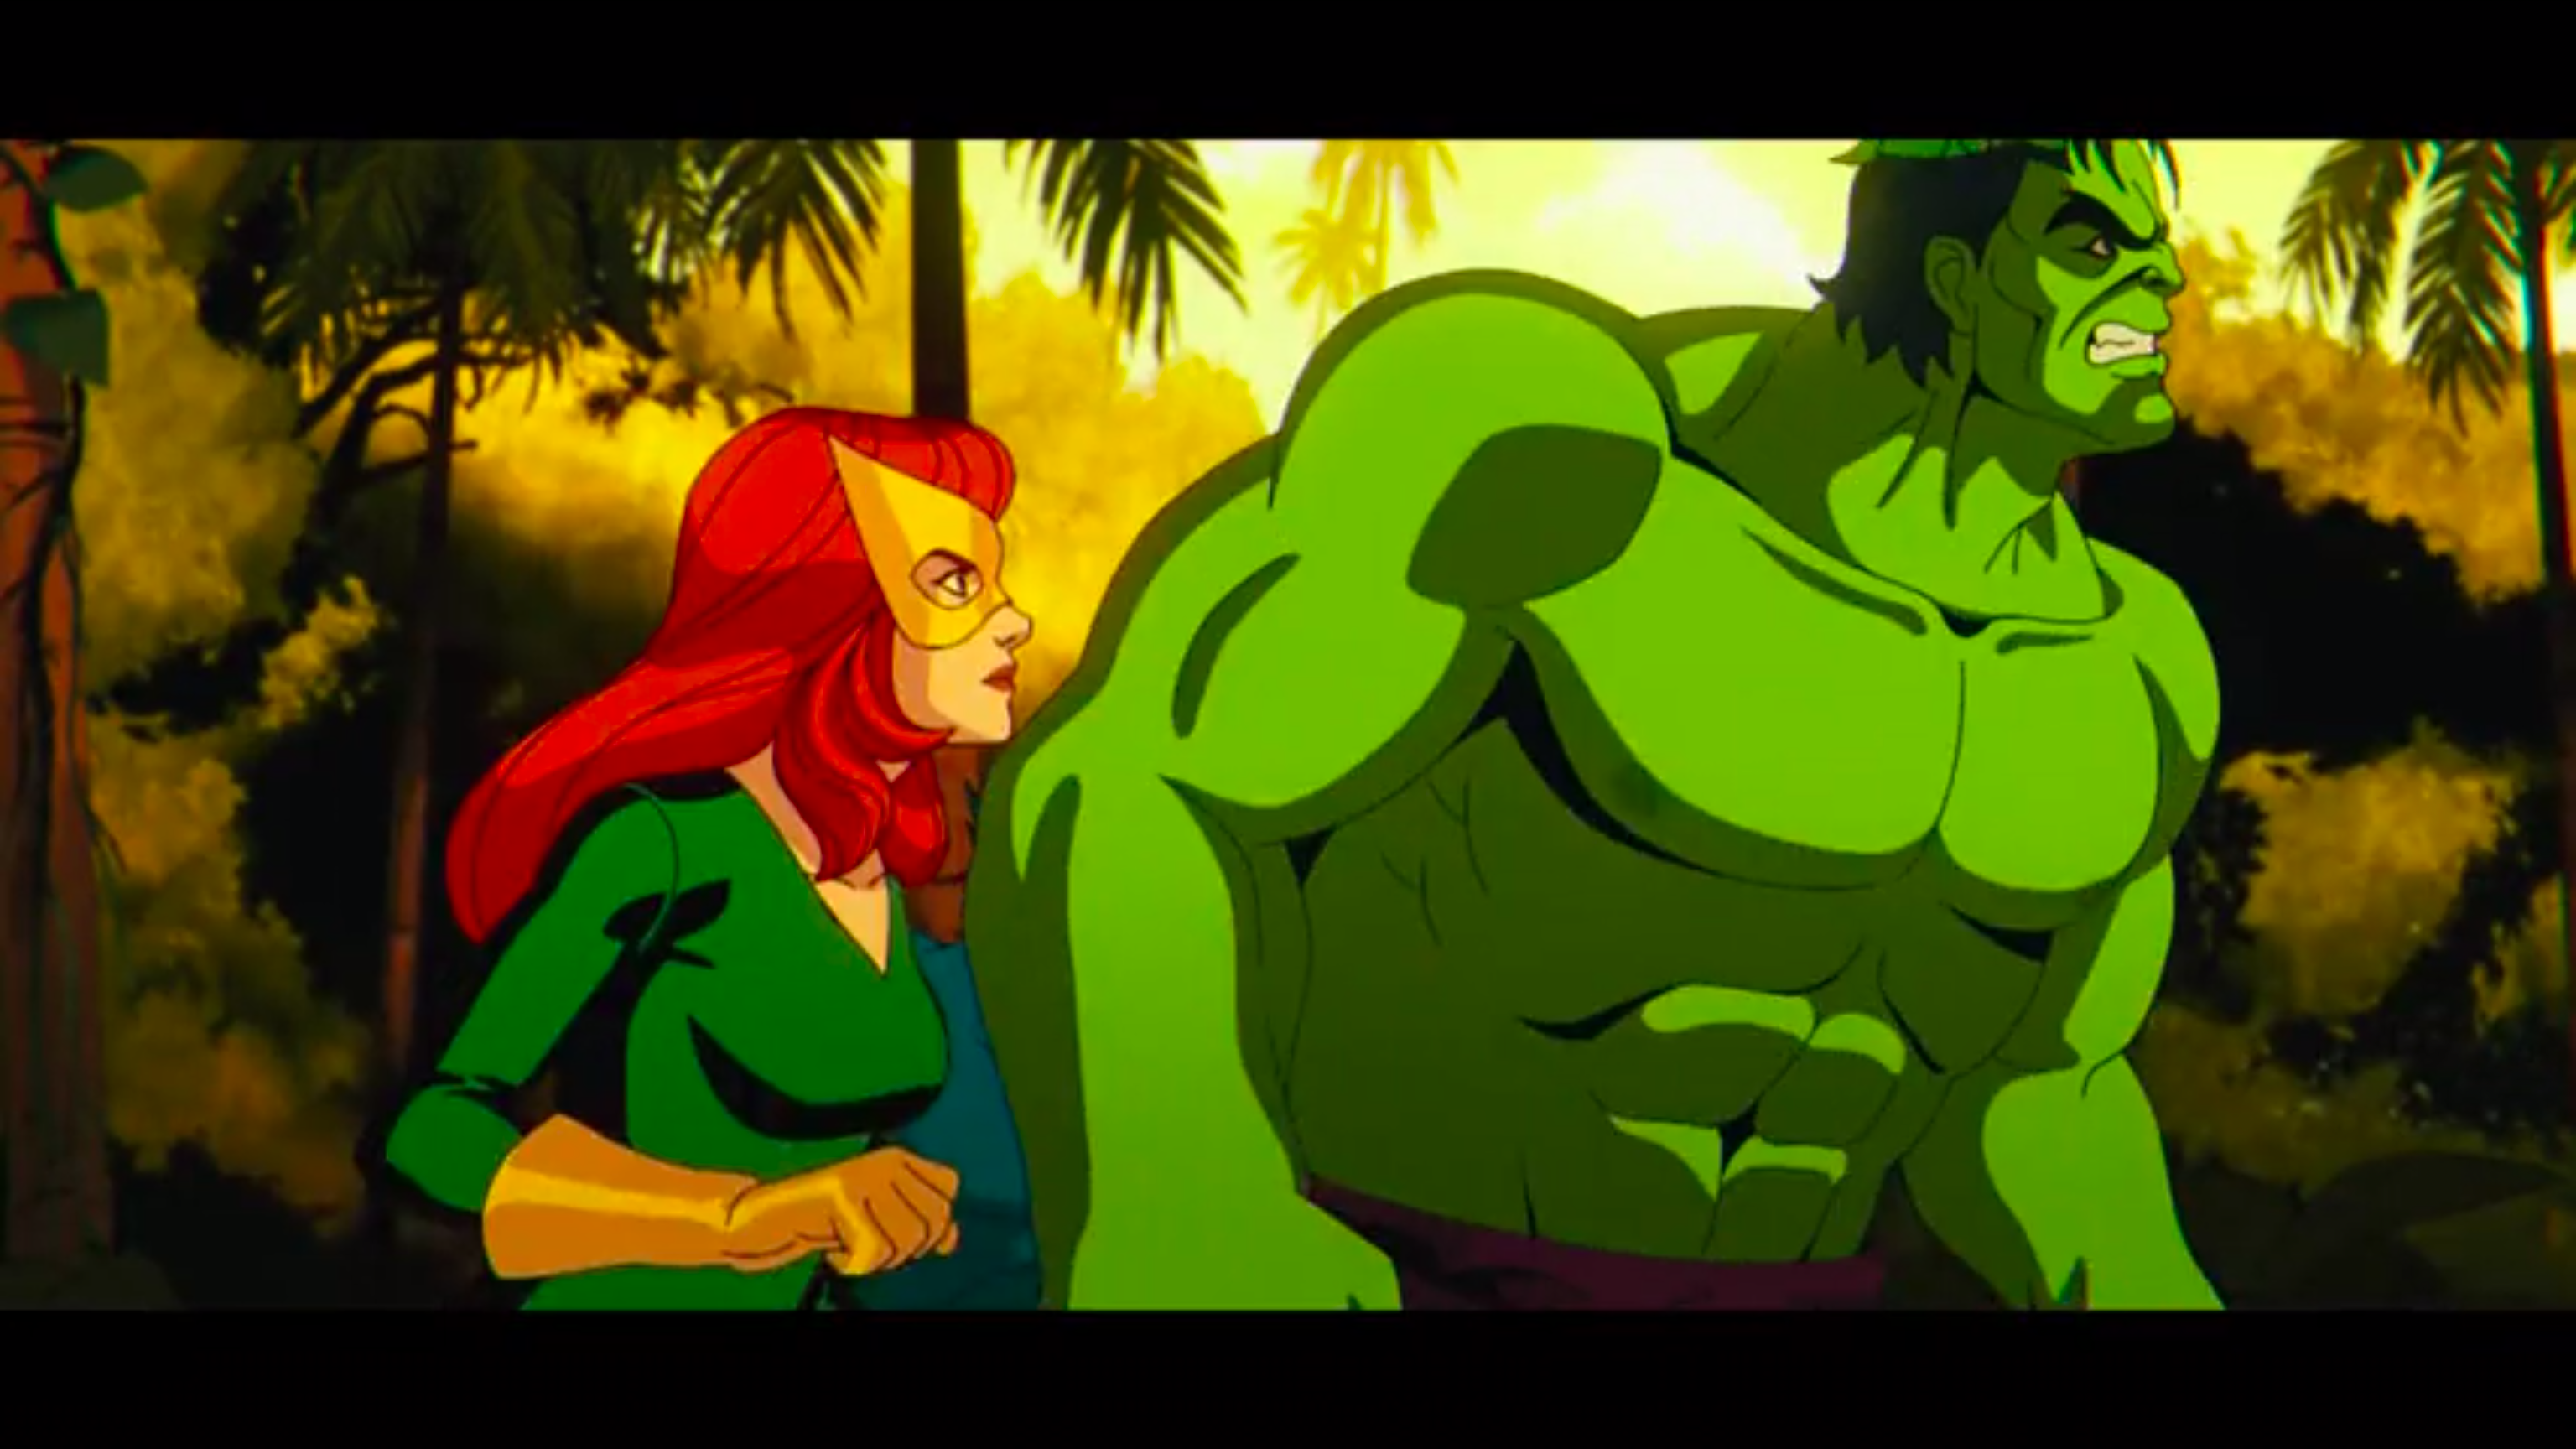  Morph turns into The Hulk